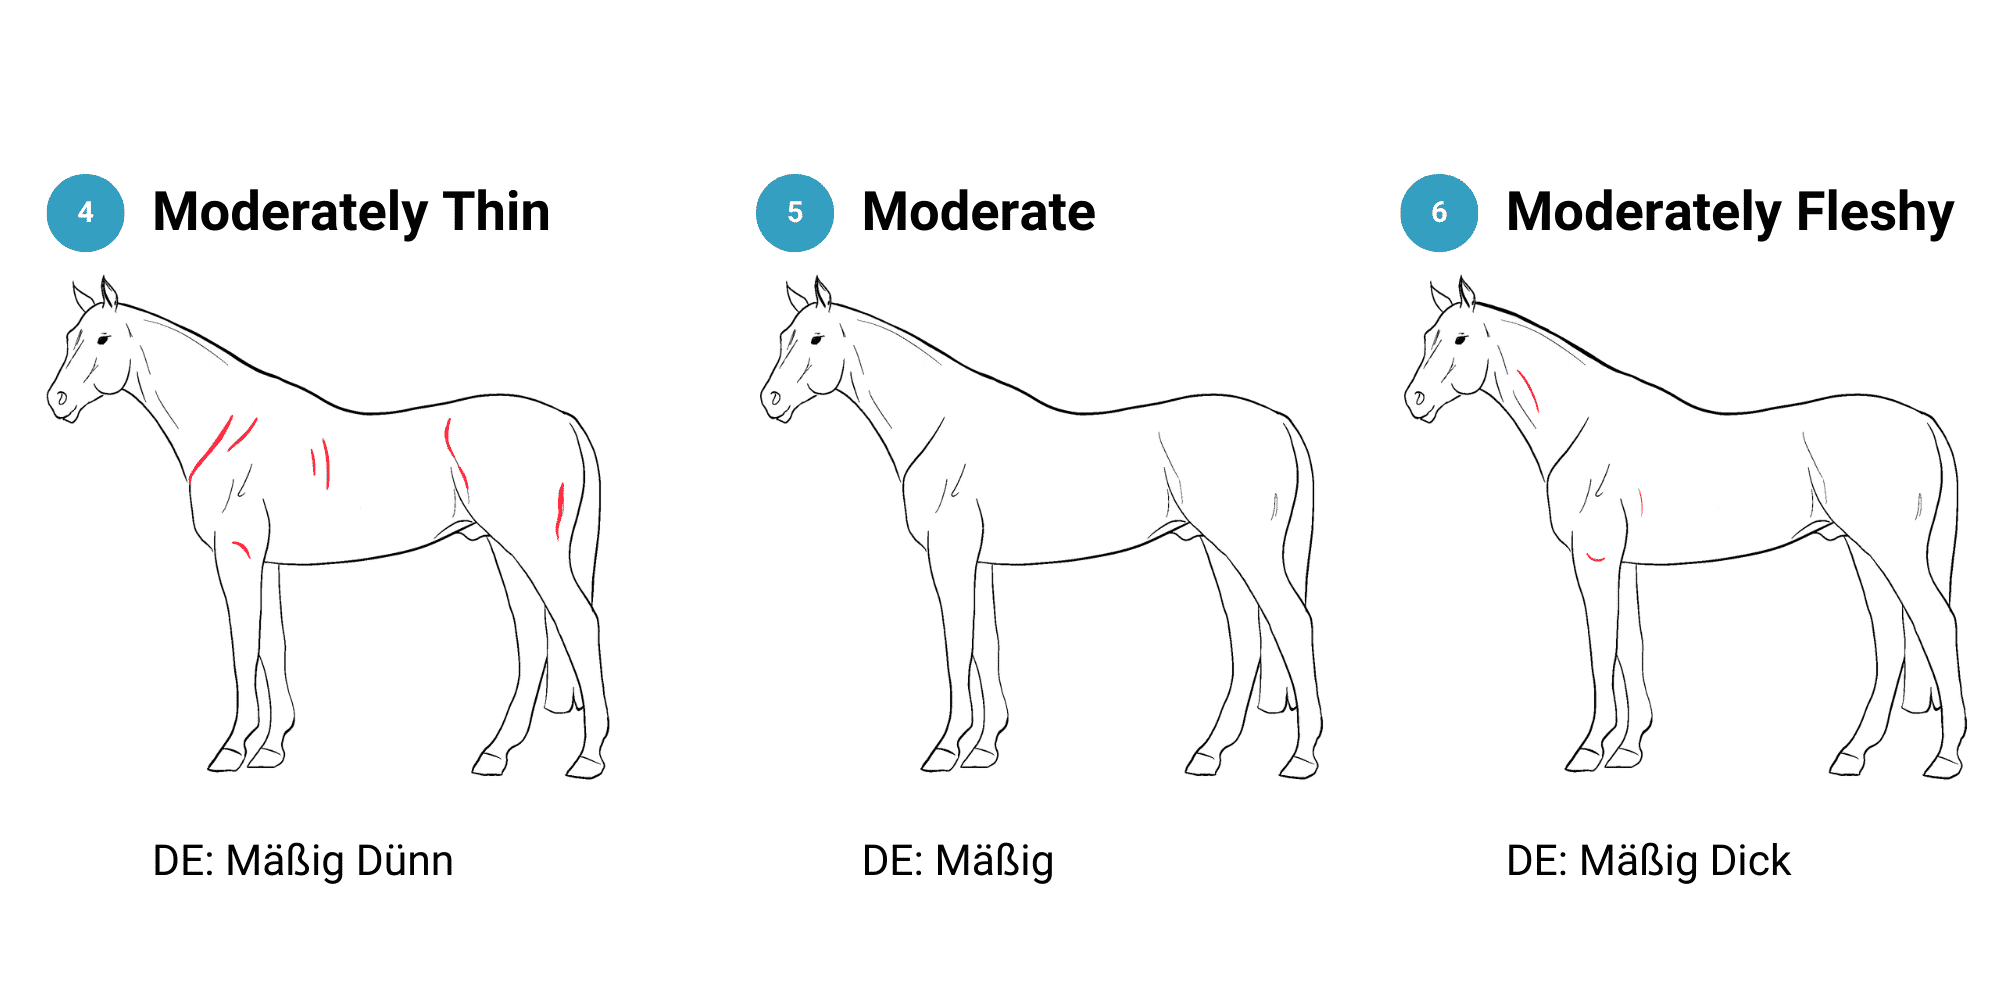 Body Condition Score 4 - 5 - 6, moderate horses